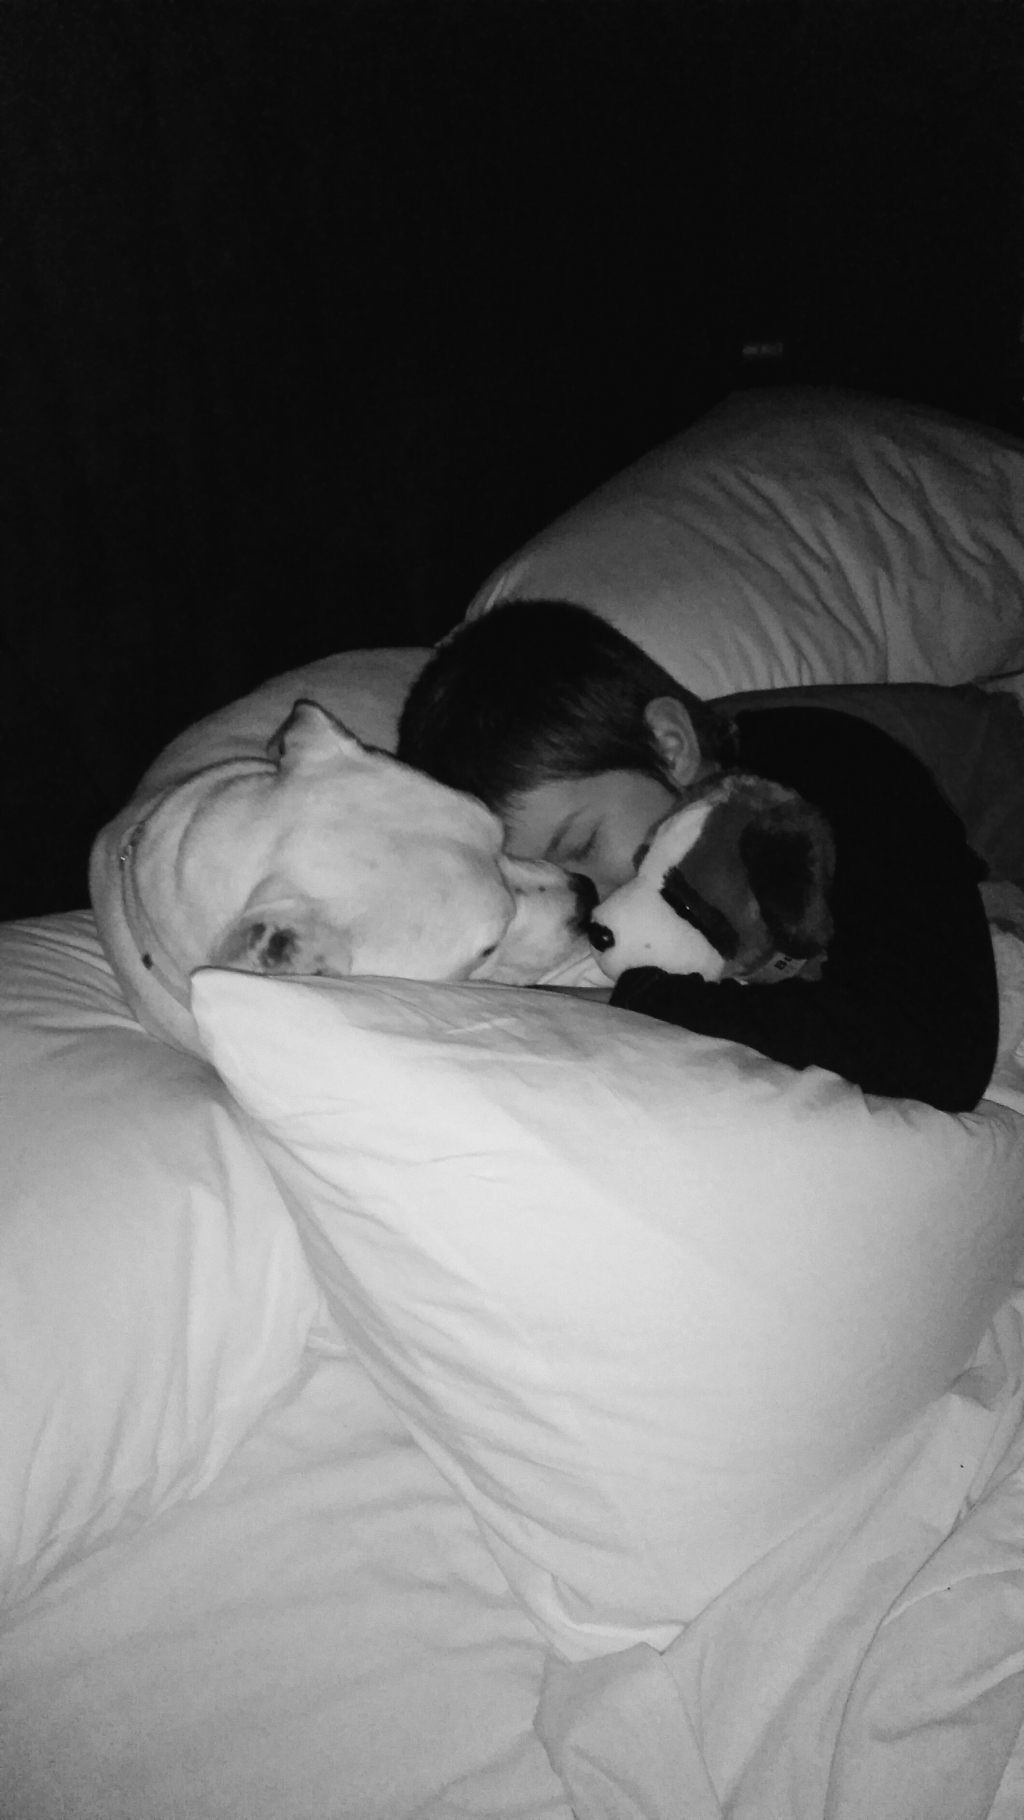 Megtography – “Pillows & Puppies”